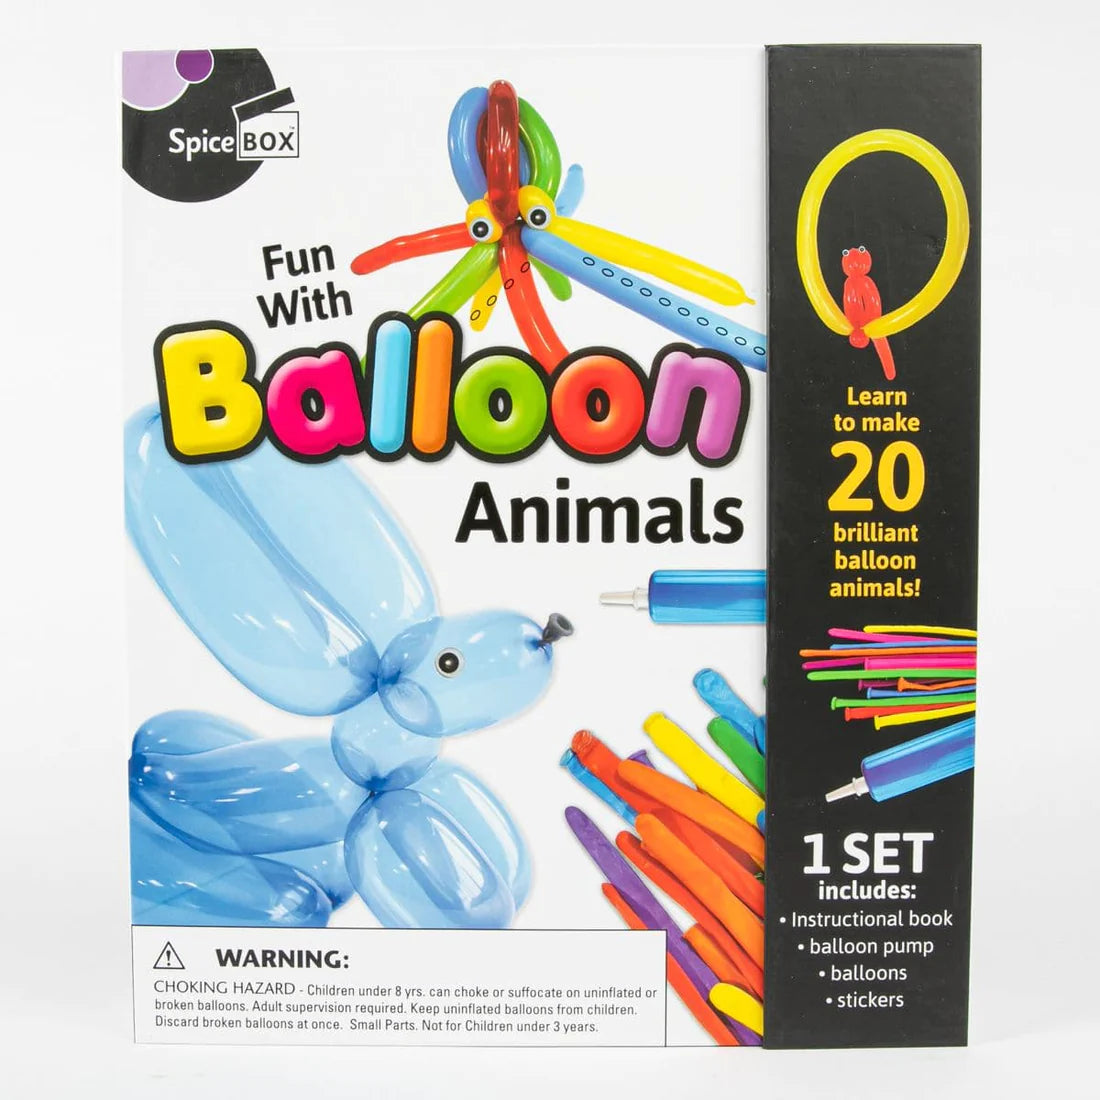 Spicebox Fun With Balloon Animals